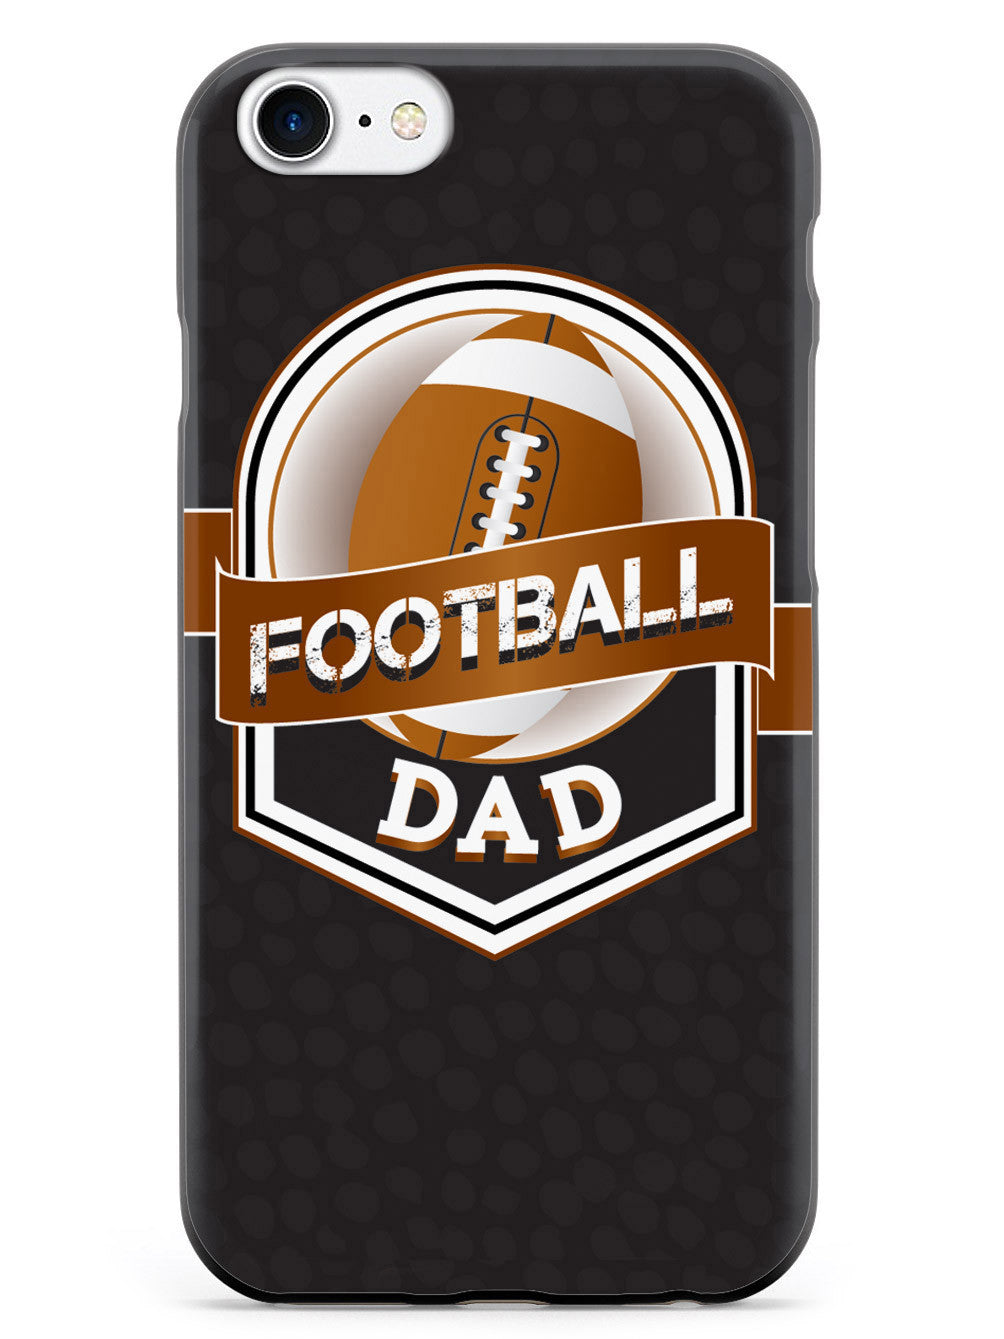 Football Dad Case